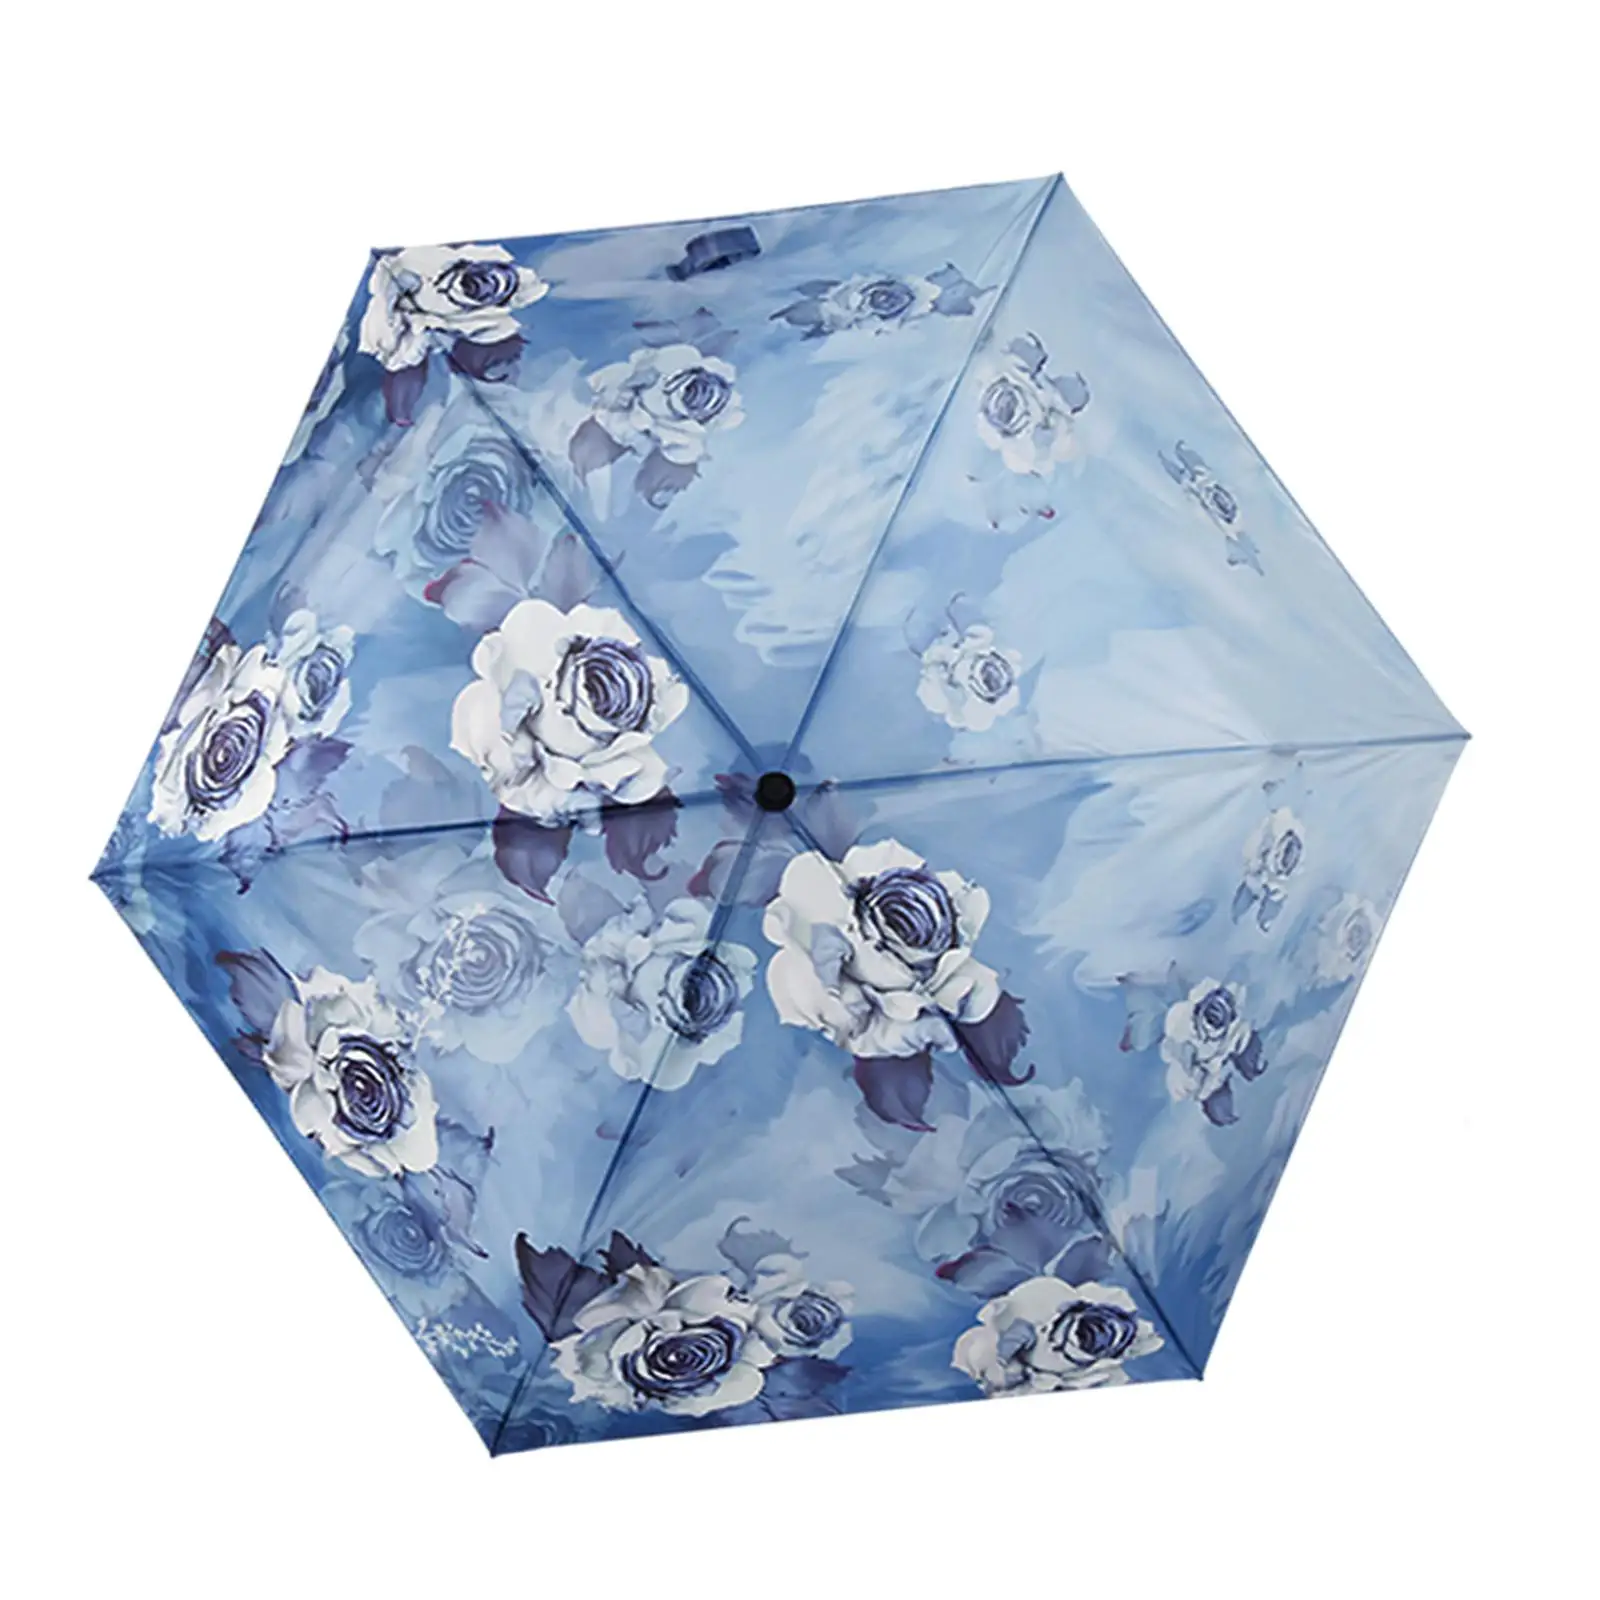 6 Ribs Rain Umbrella for Women Portable Manual Water Resistant Travel Umbrella for Rain for Trip Beach Walking Backpacking Patio